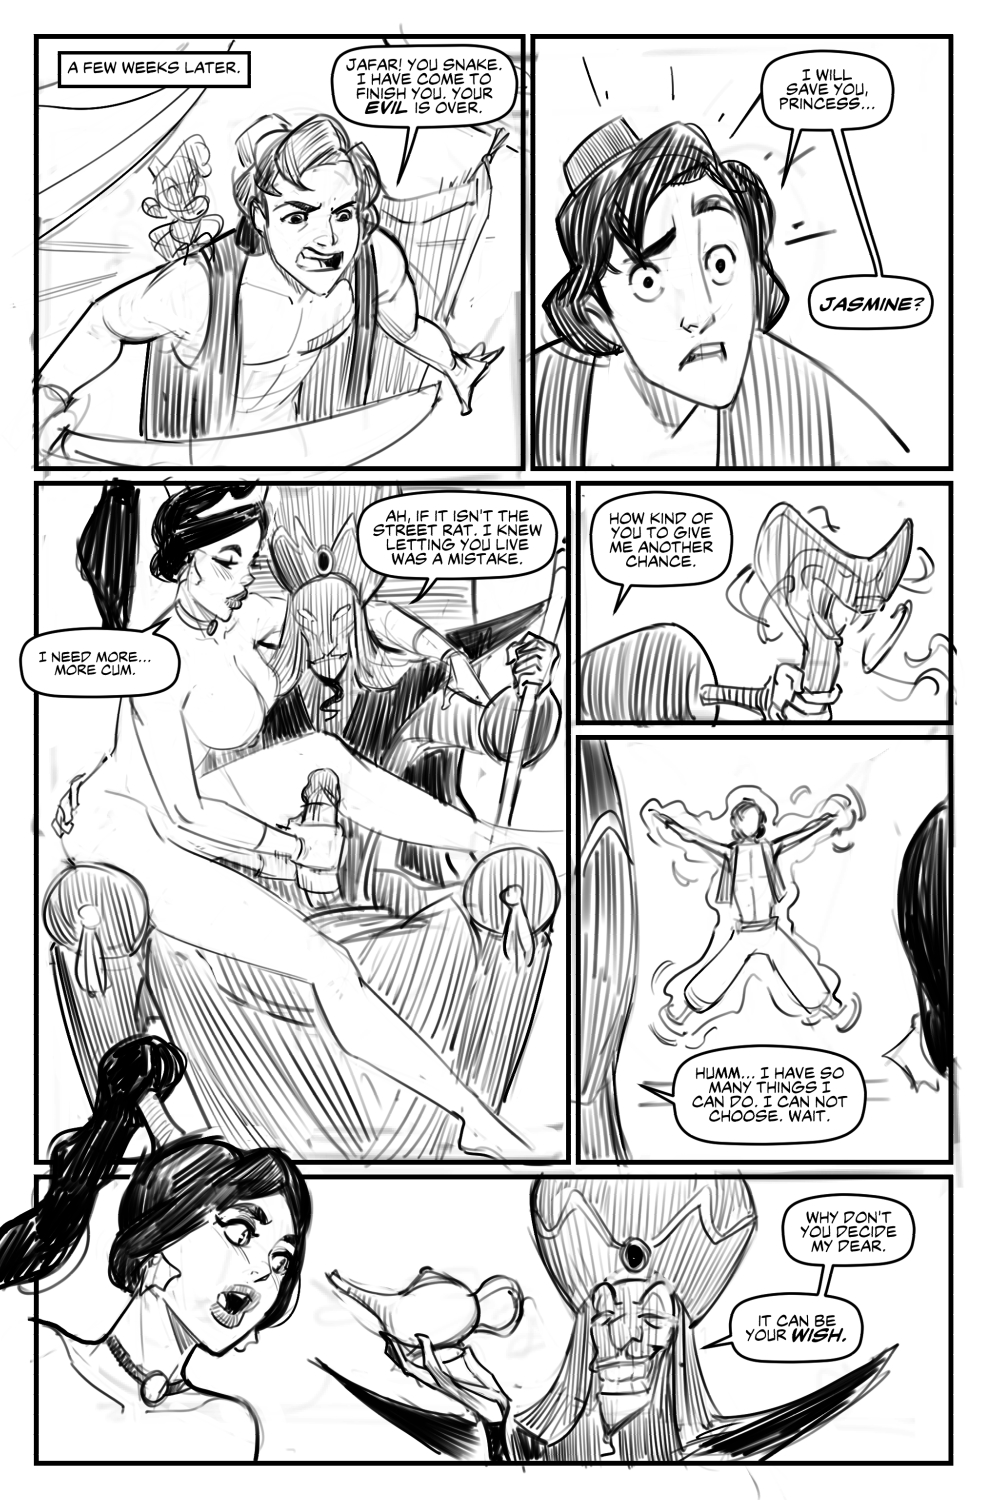 bimbo jasmine page 09